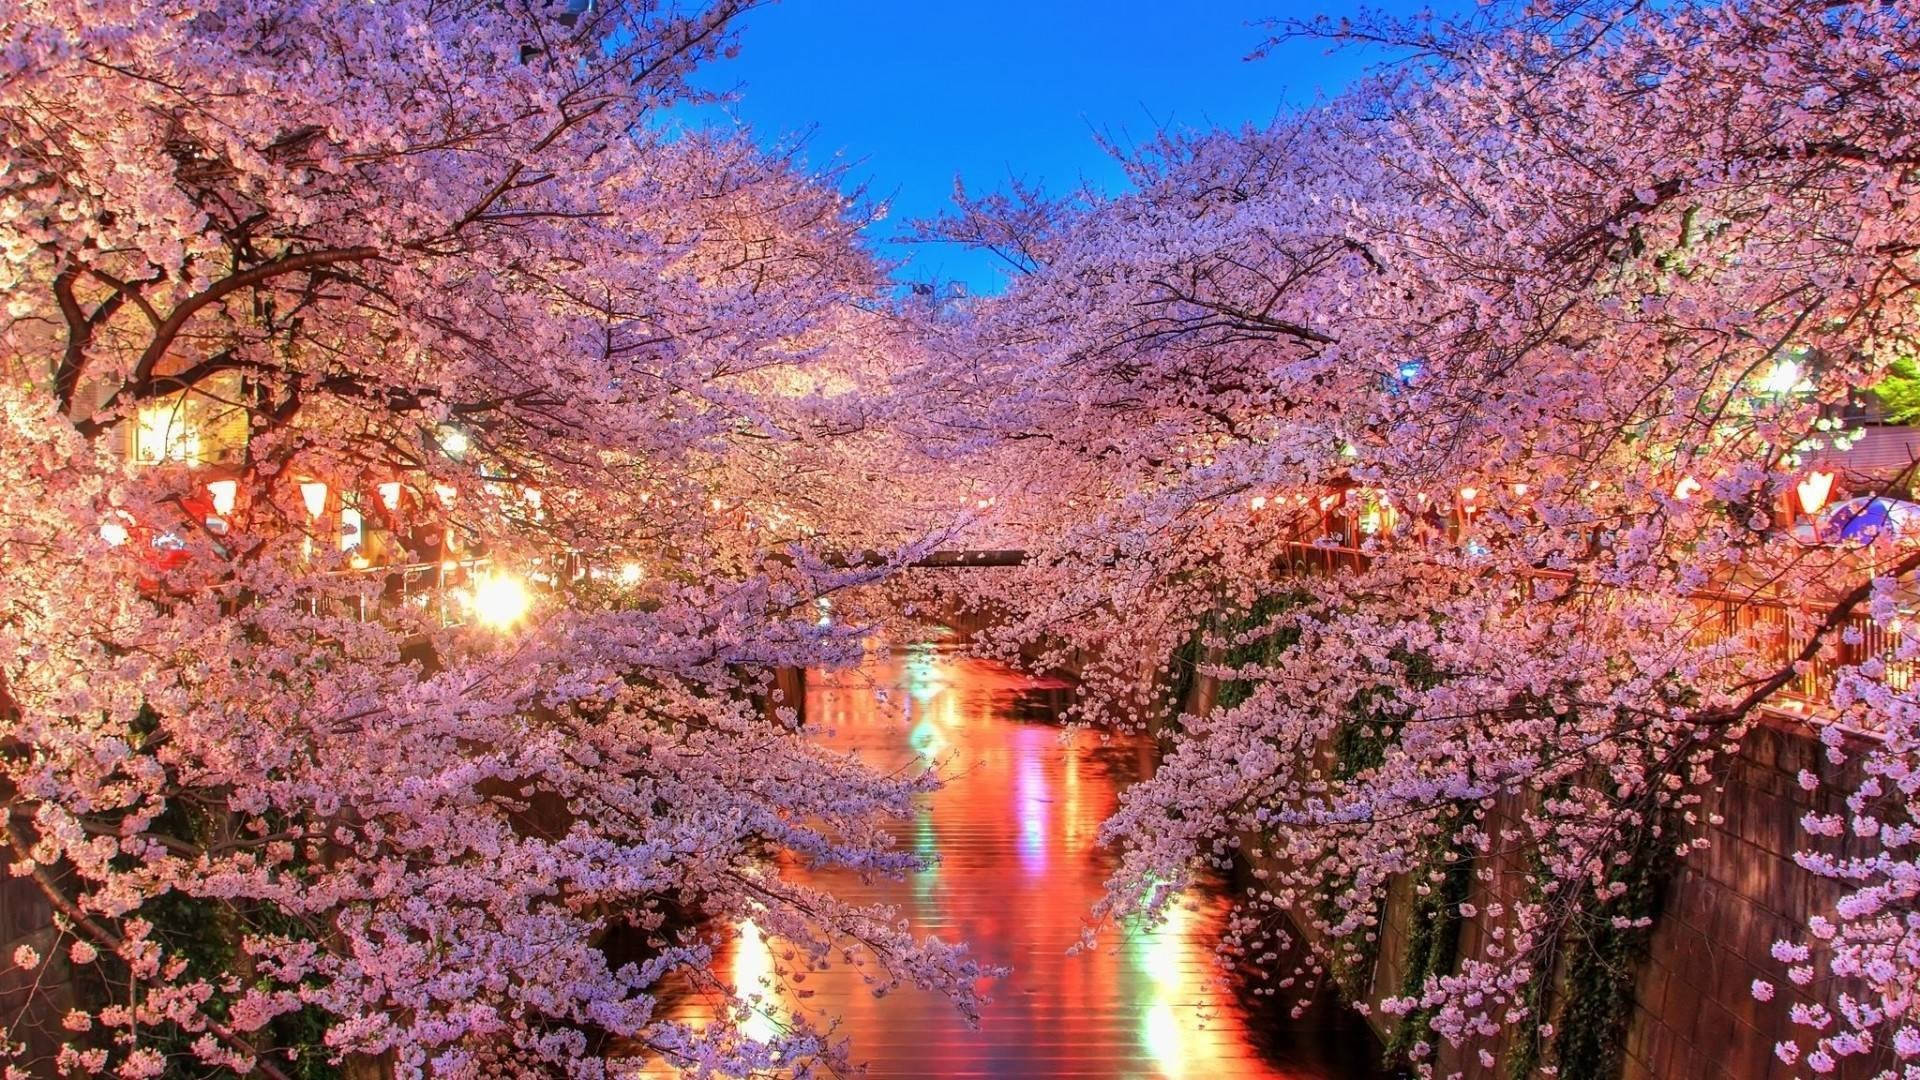 Enjoy The Beauty Of Japan's Cherry Blossom Season! Wallpaper